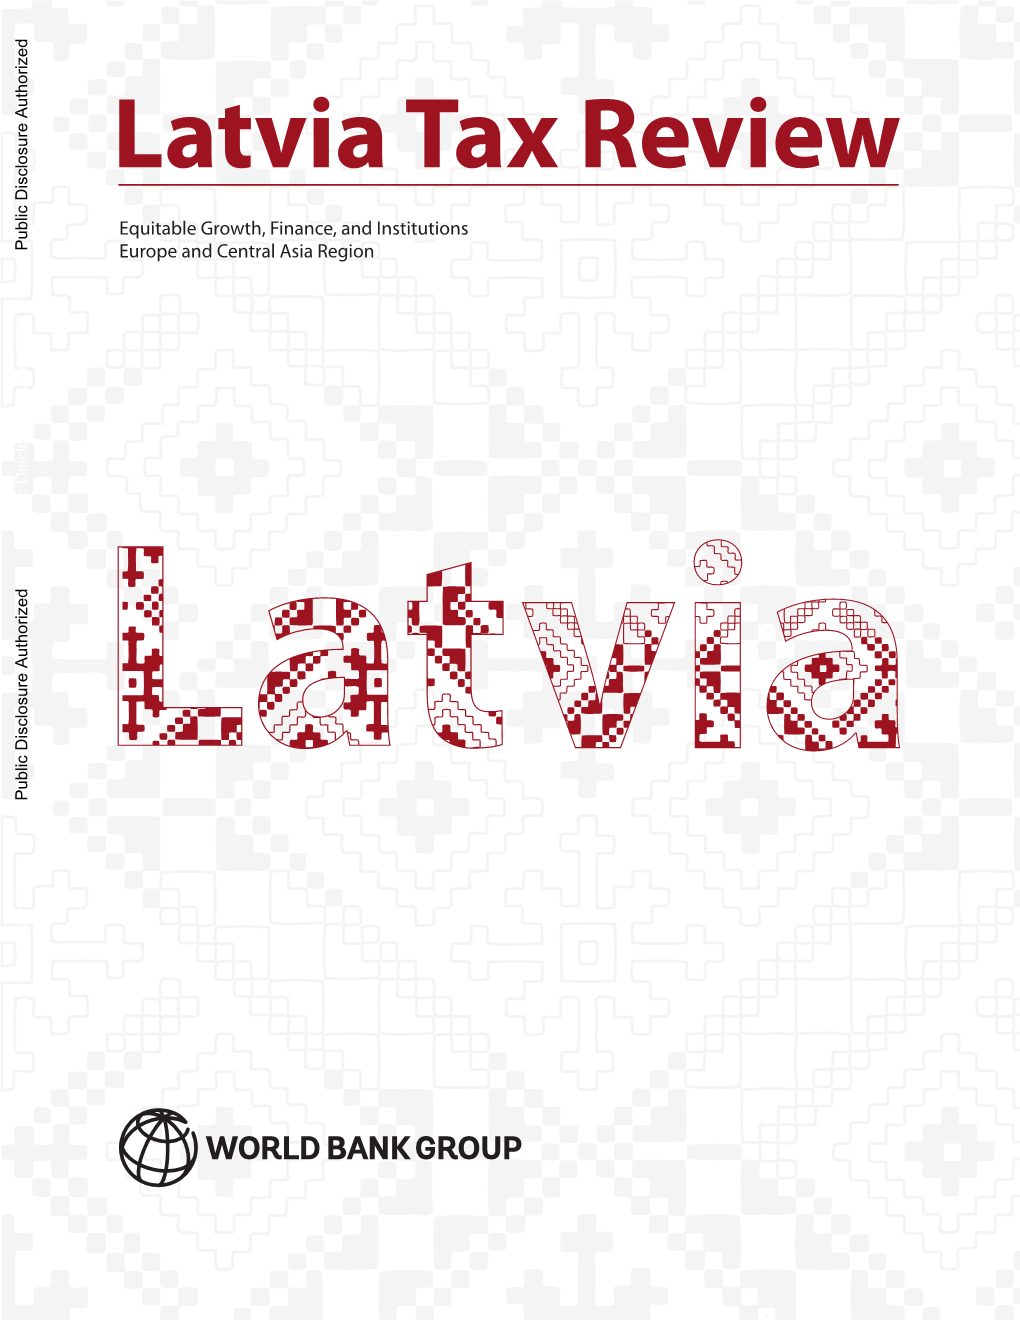 Latvia-Tax-Review.Pdf